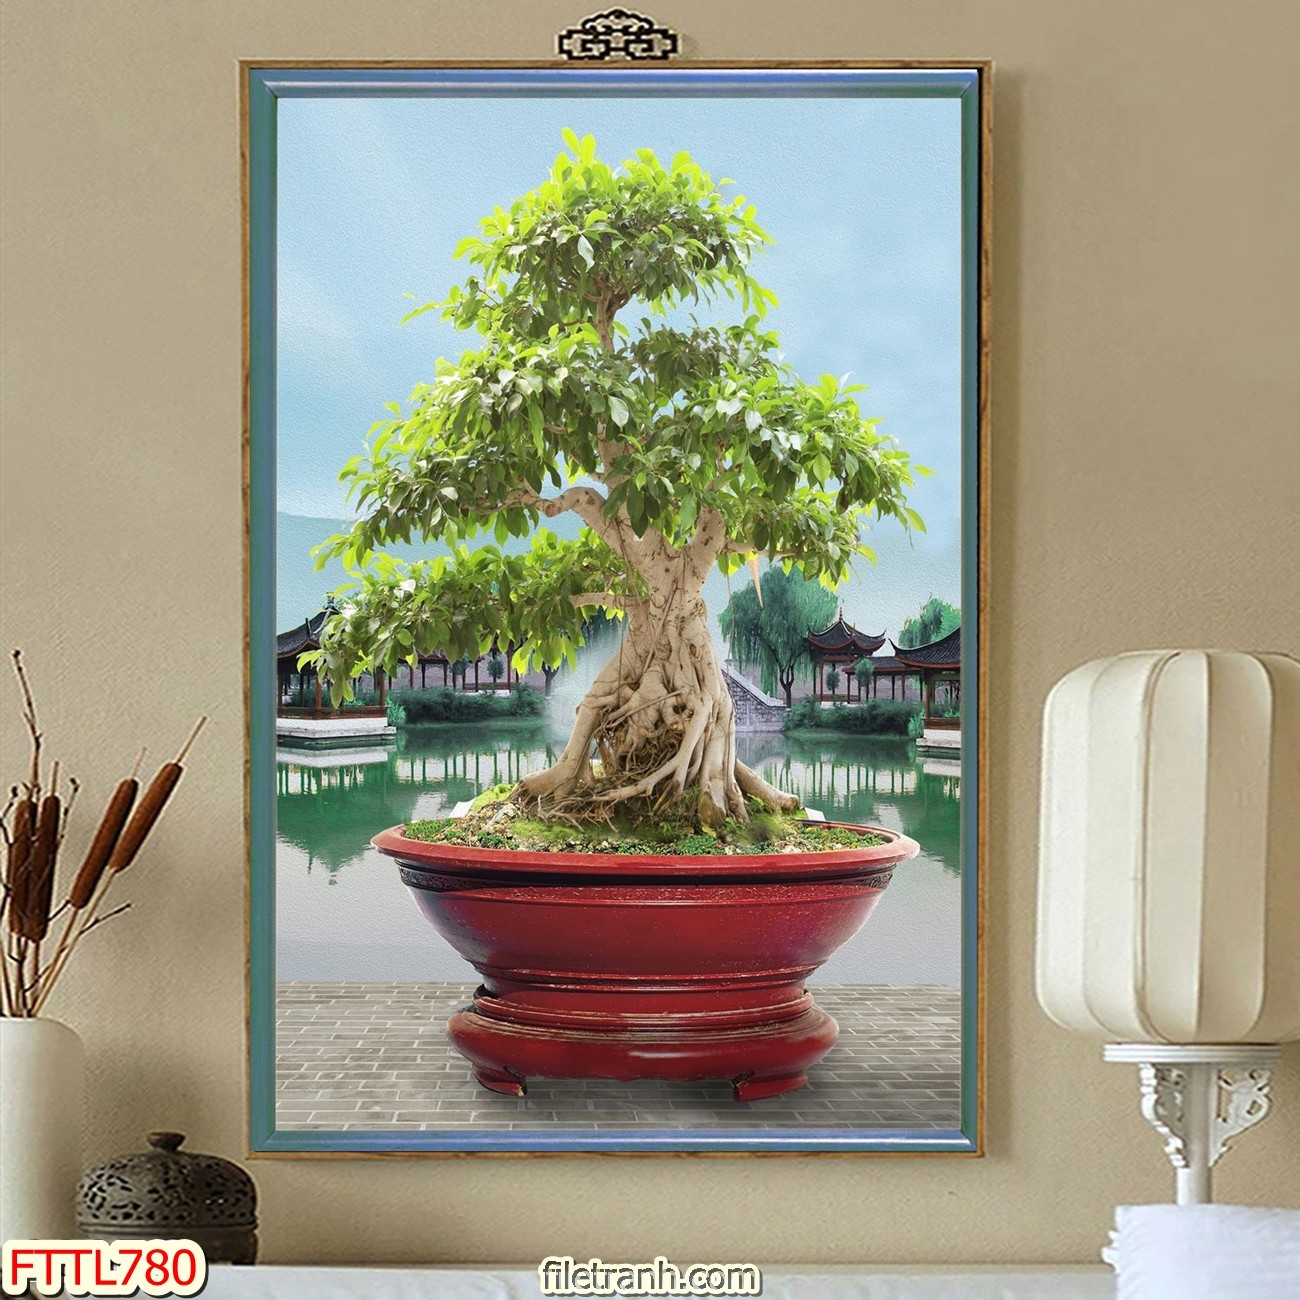 https://filetranh.com/file-tranh-chau-mai-bonsai/file-tranh-chau-mai-bonsai-fttl780.html